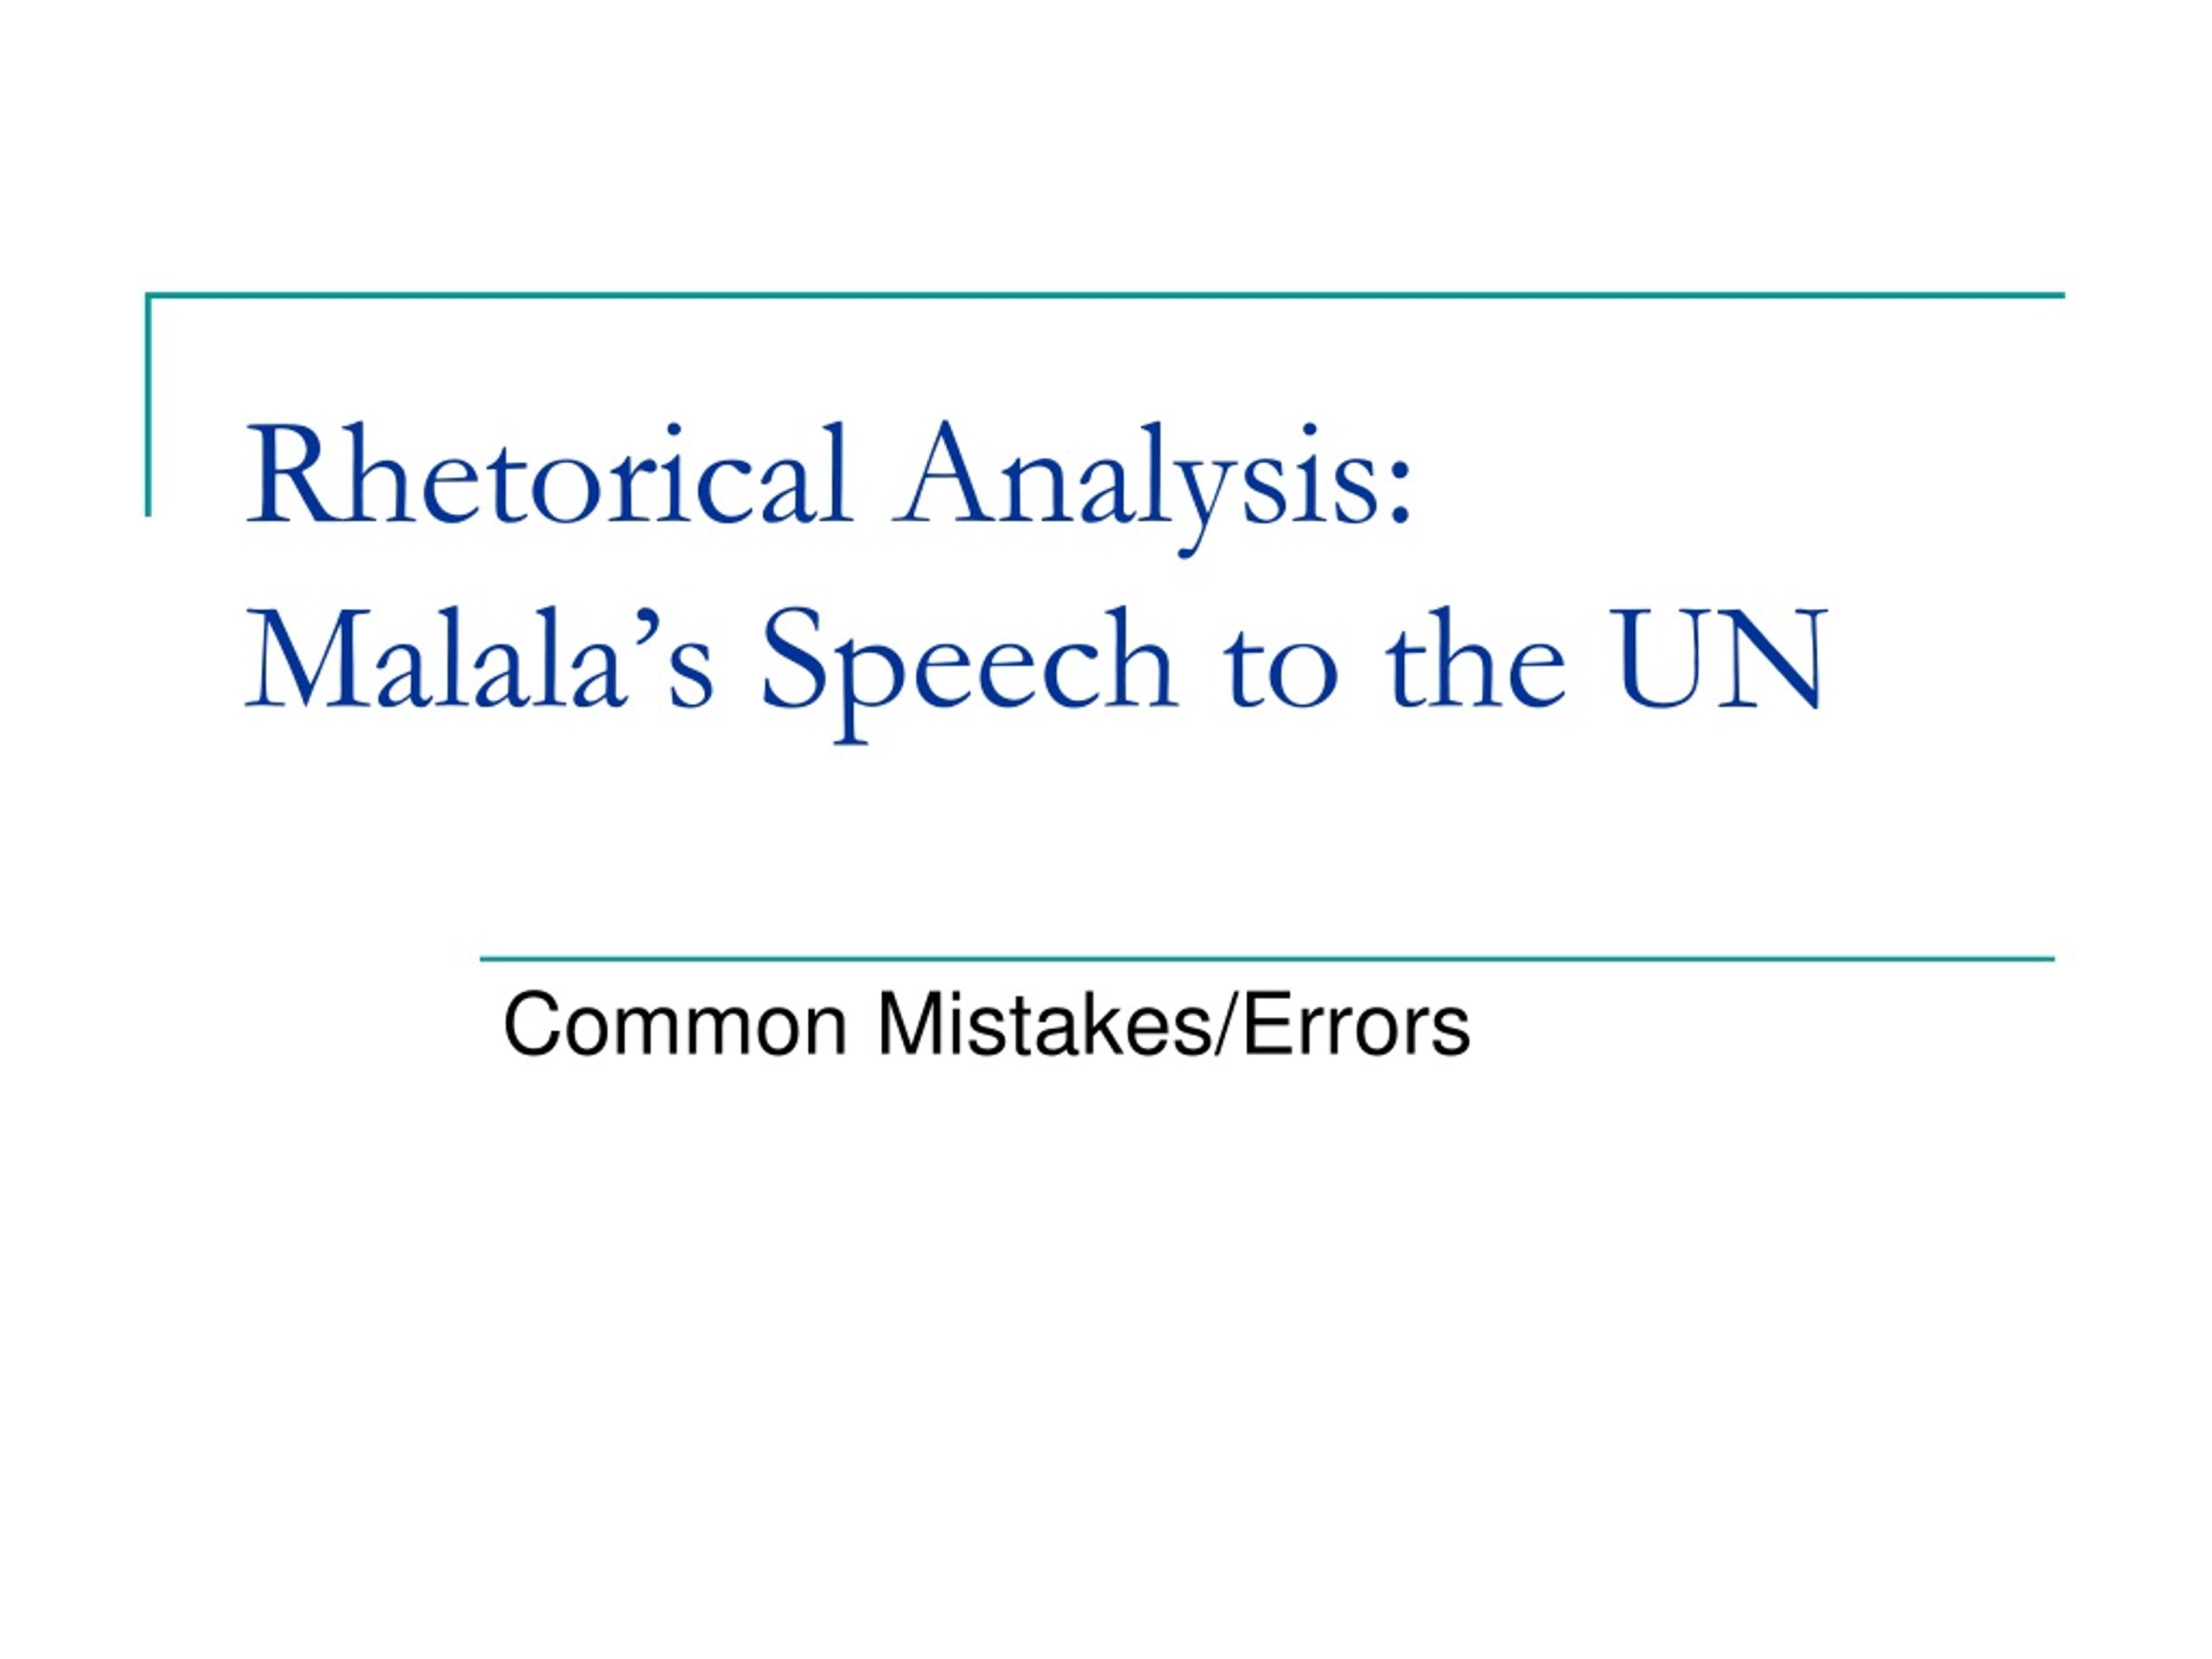 rhetorical analysis of malala's un speech